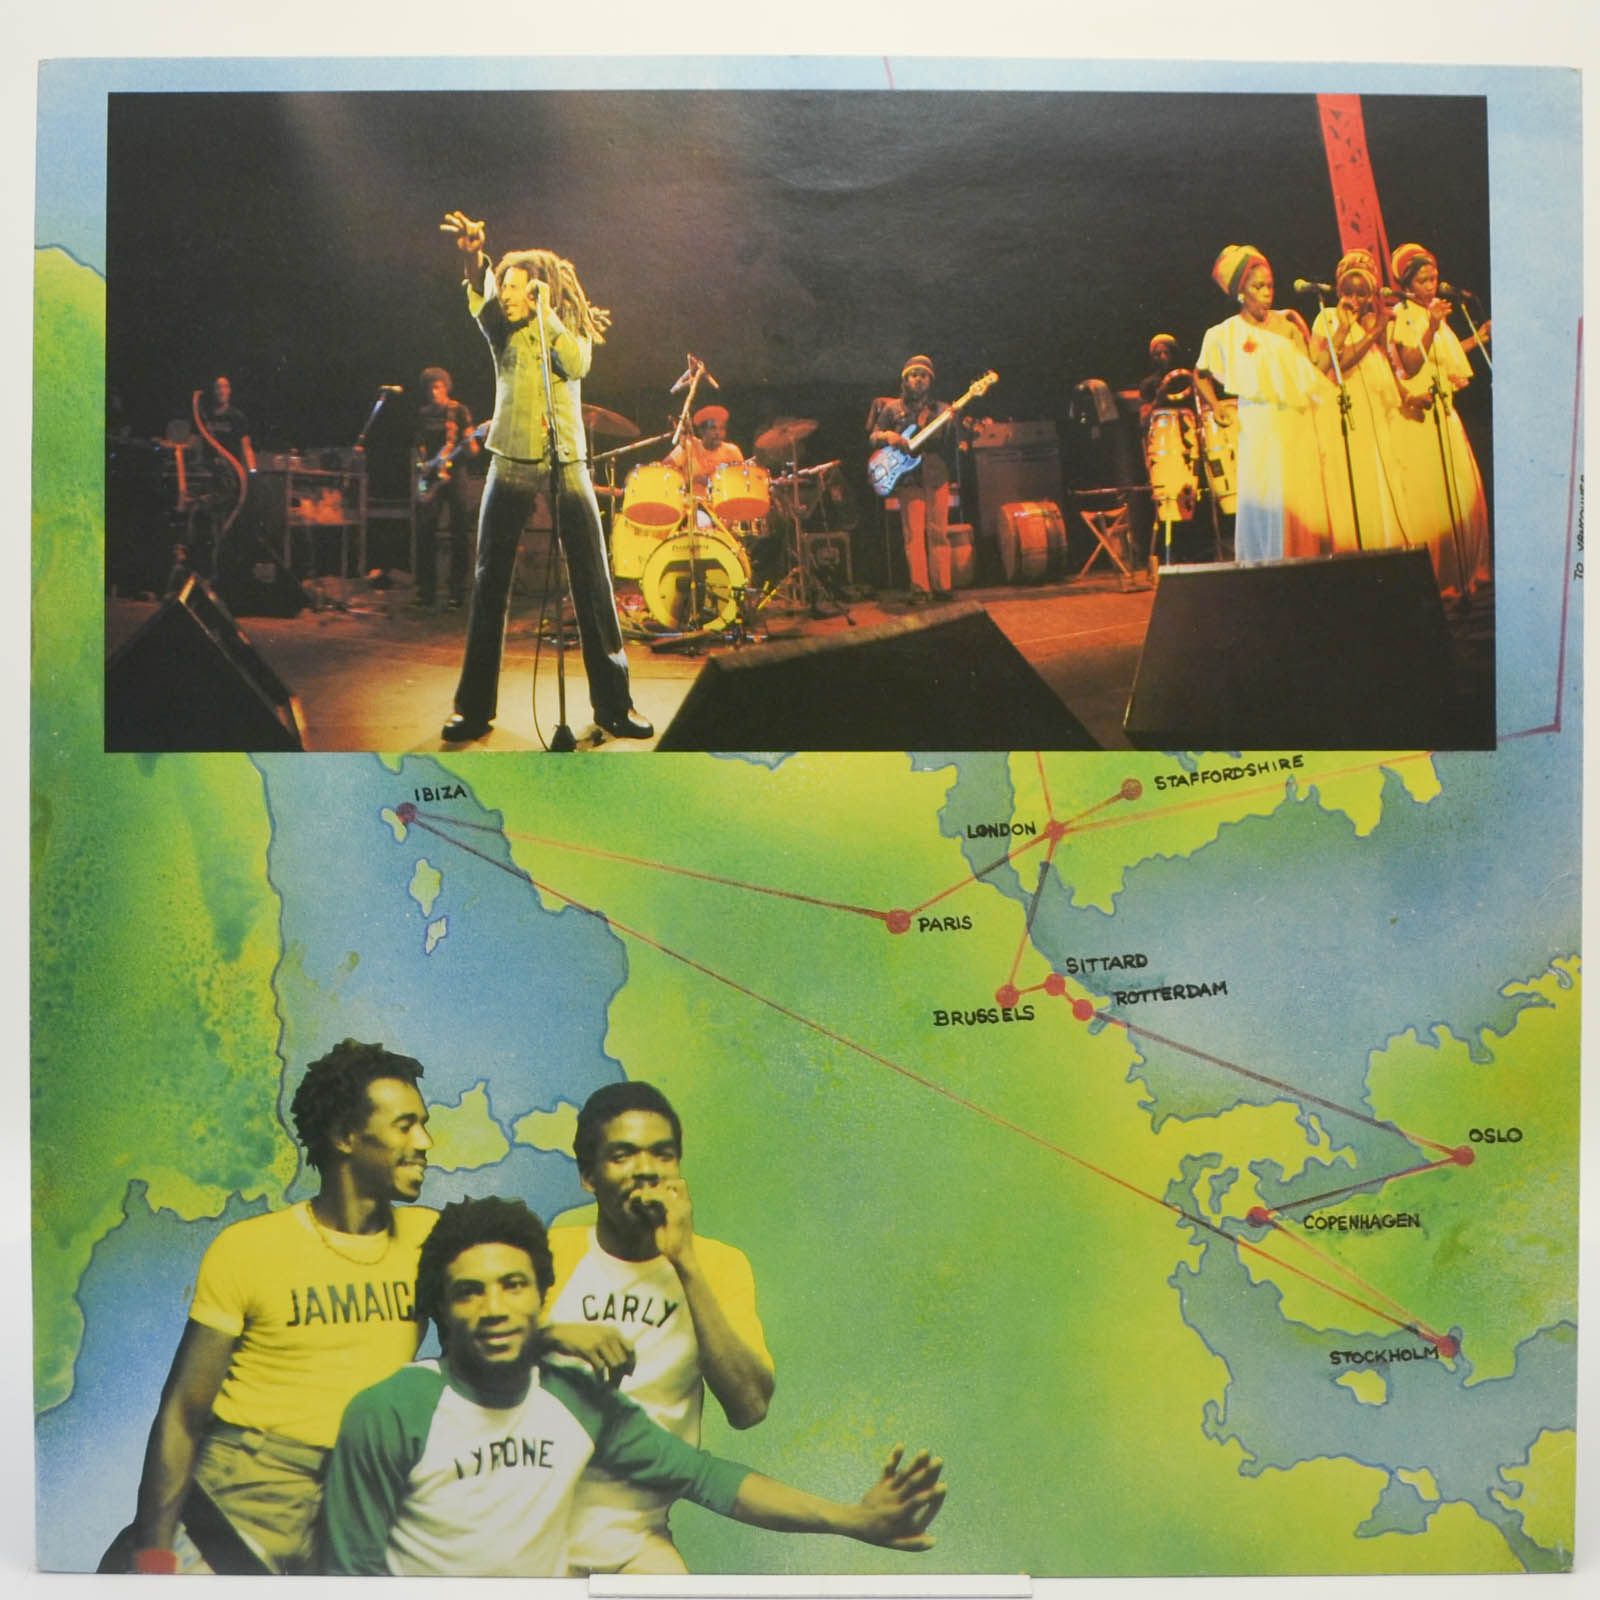 Bob Marley & The Wailers — Babylon By Bus (2LP), 1978